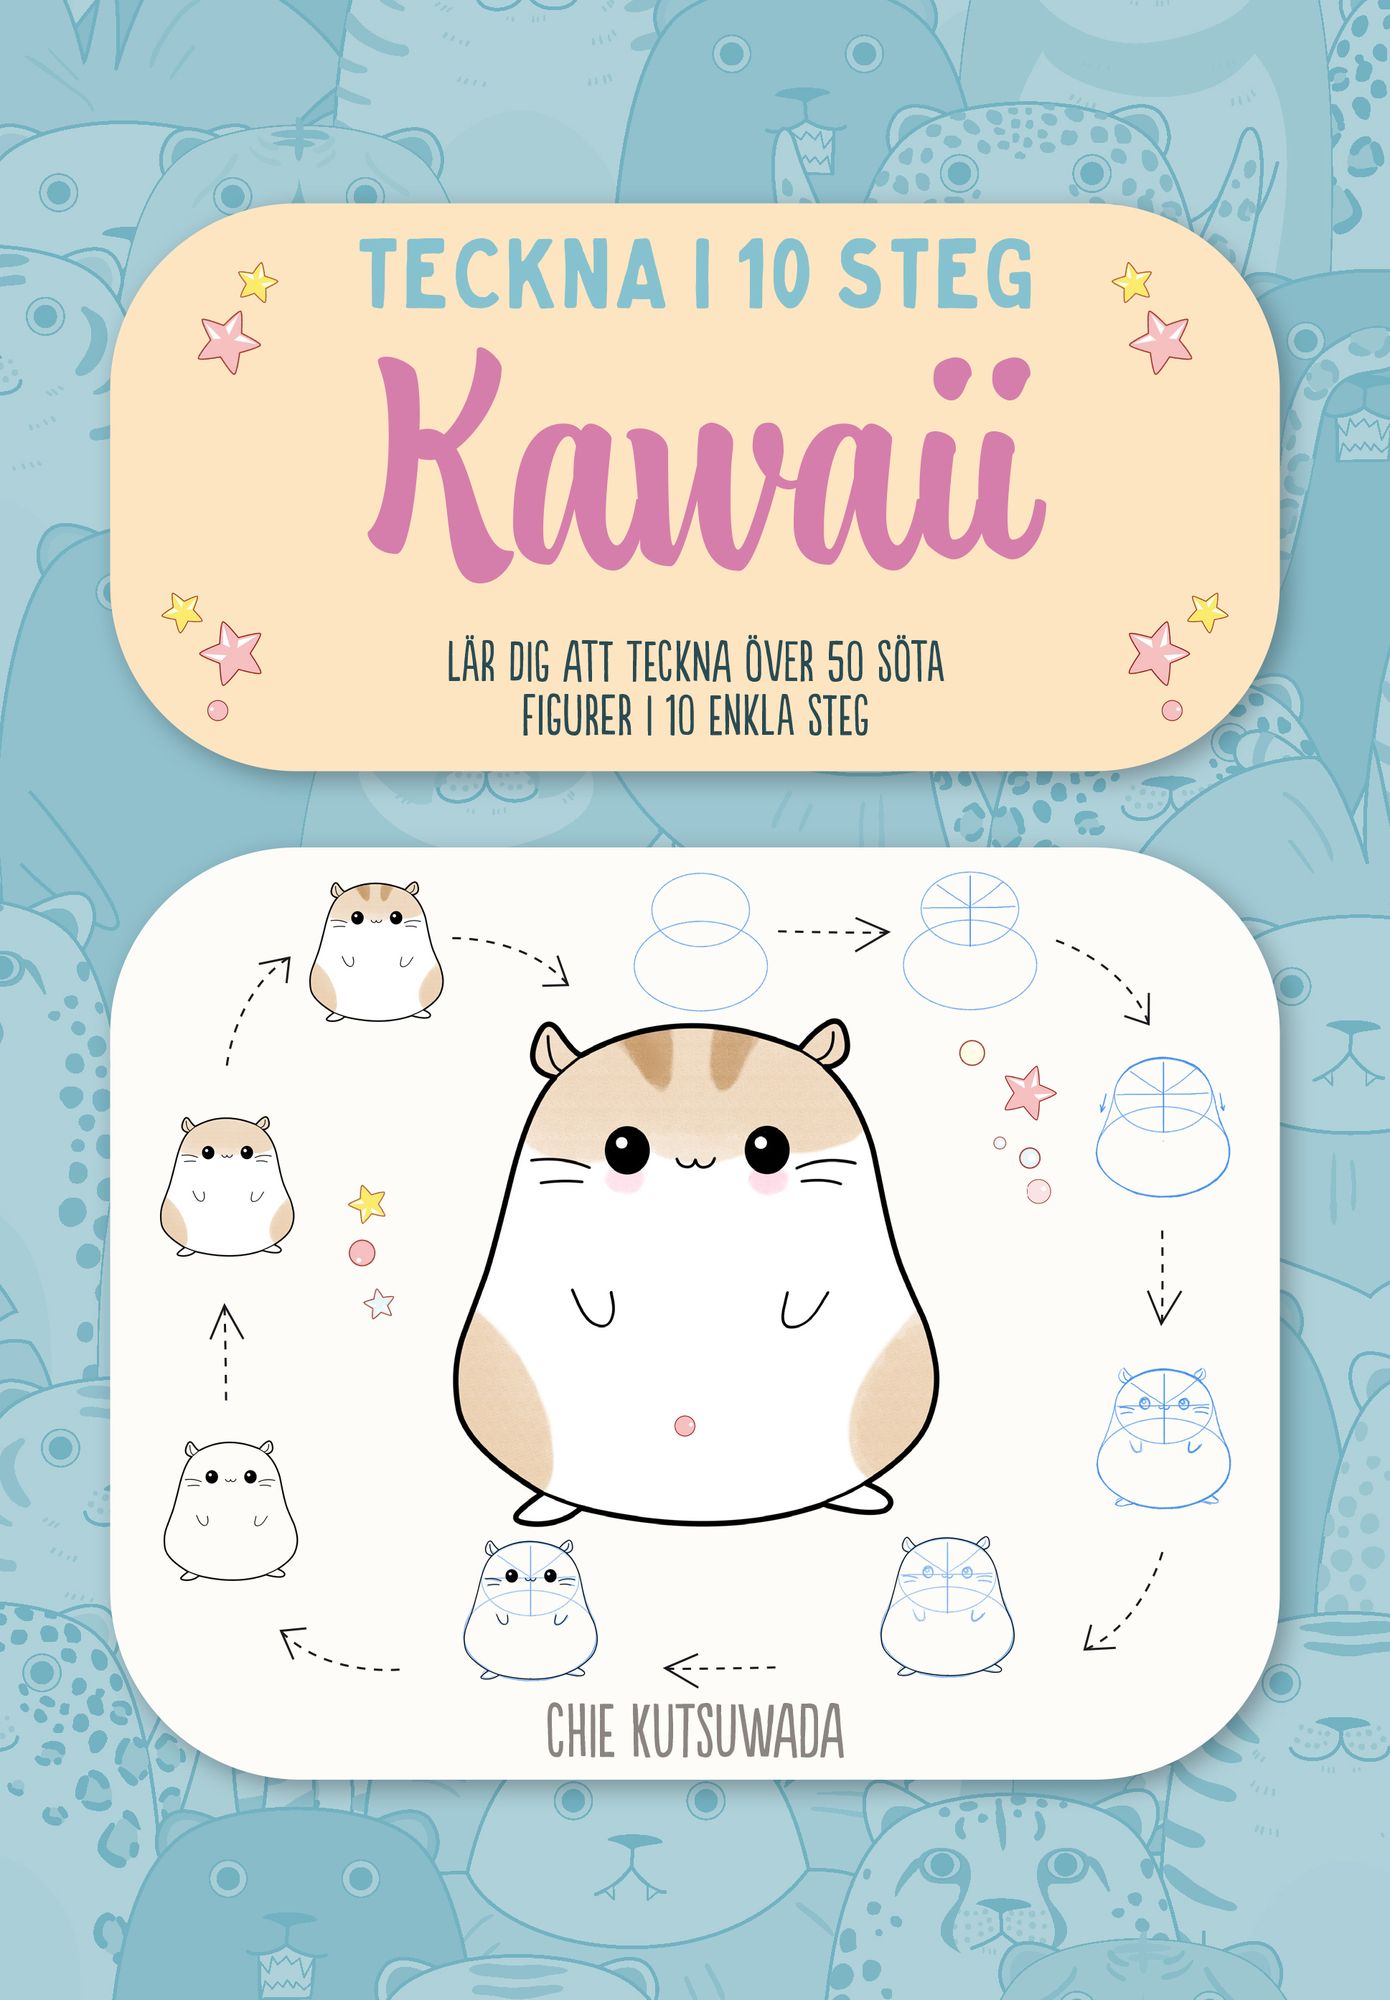 Tegn i 19 trinn: Kawaii